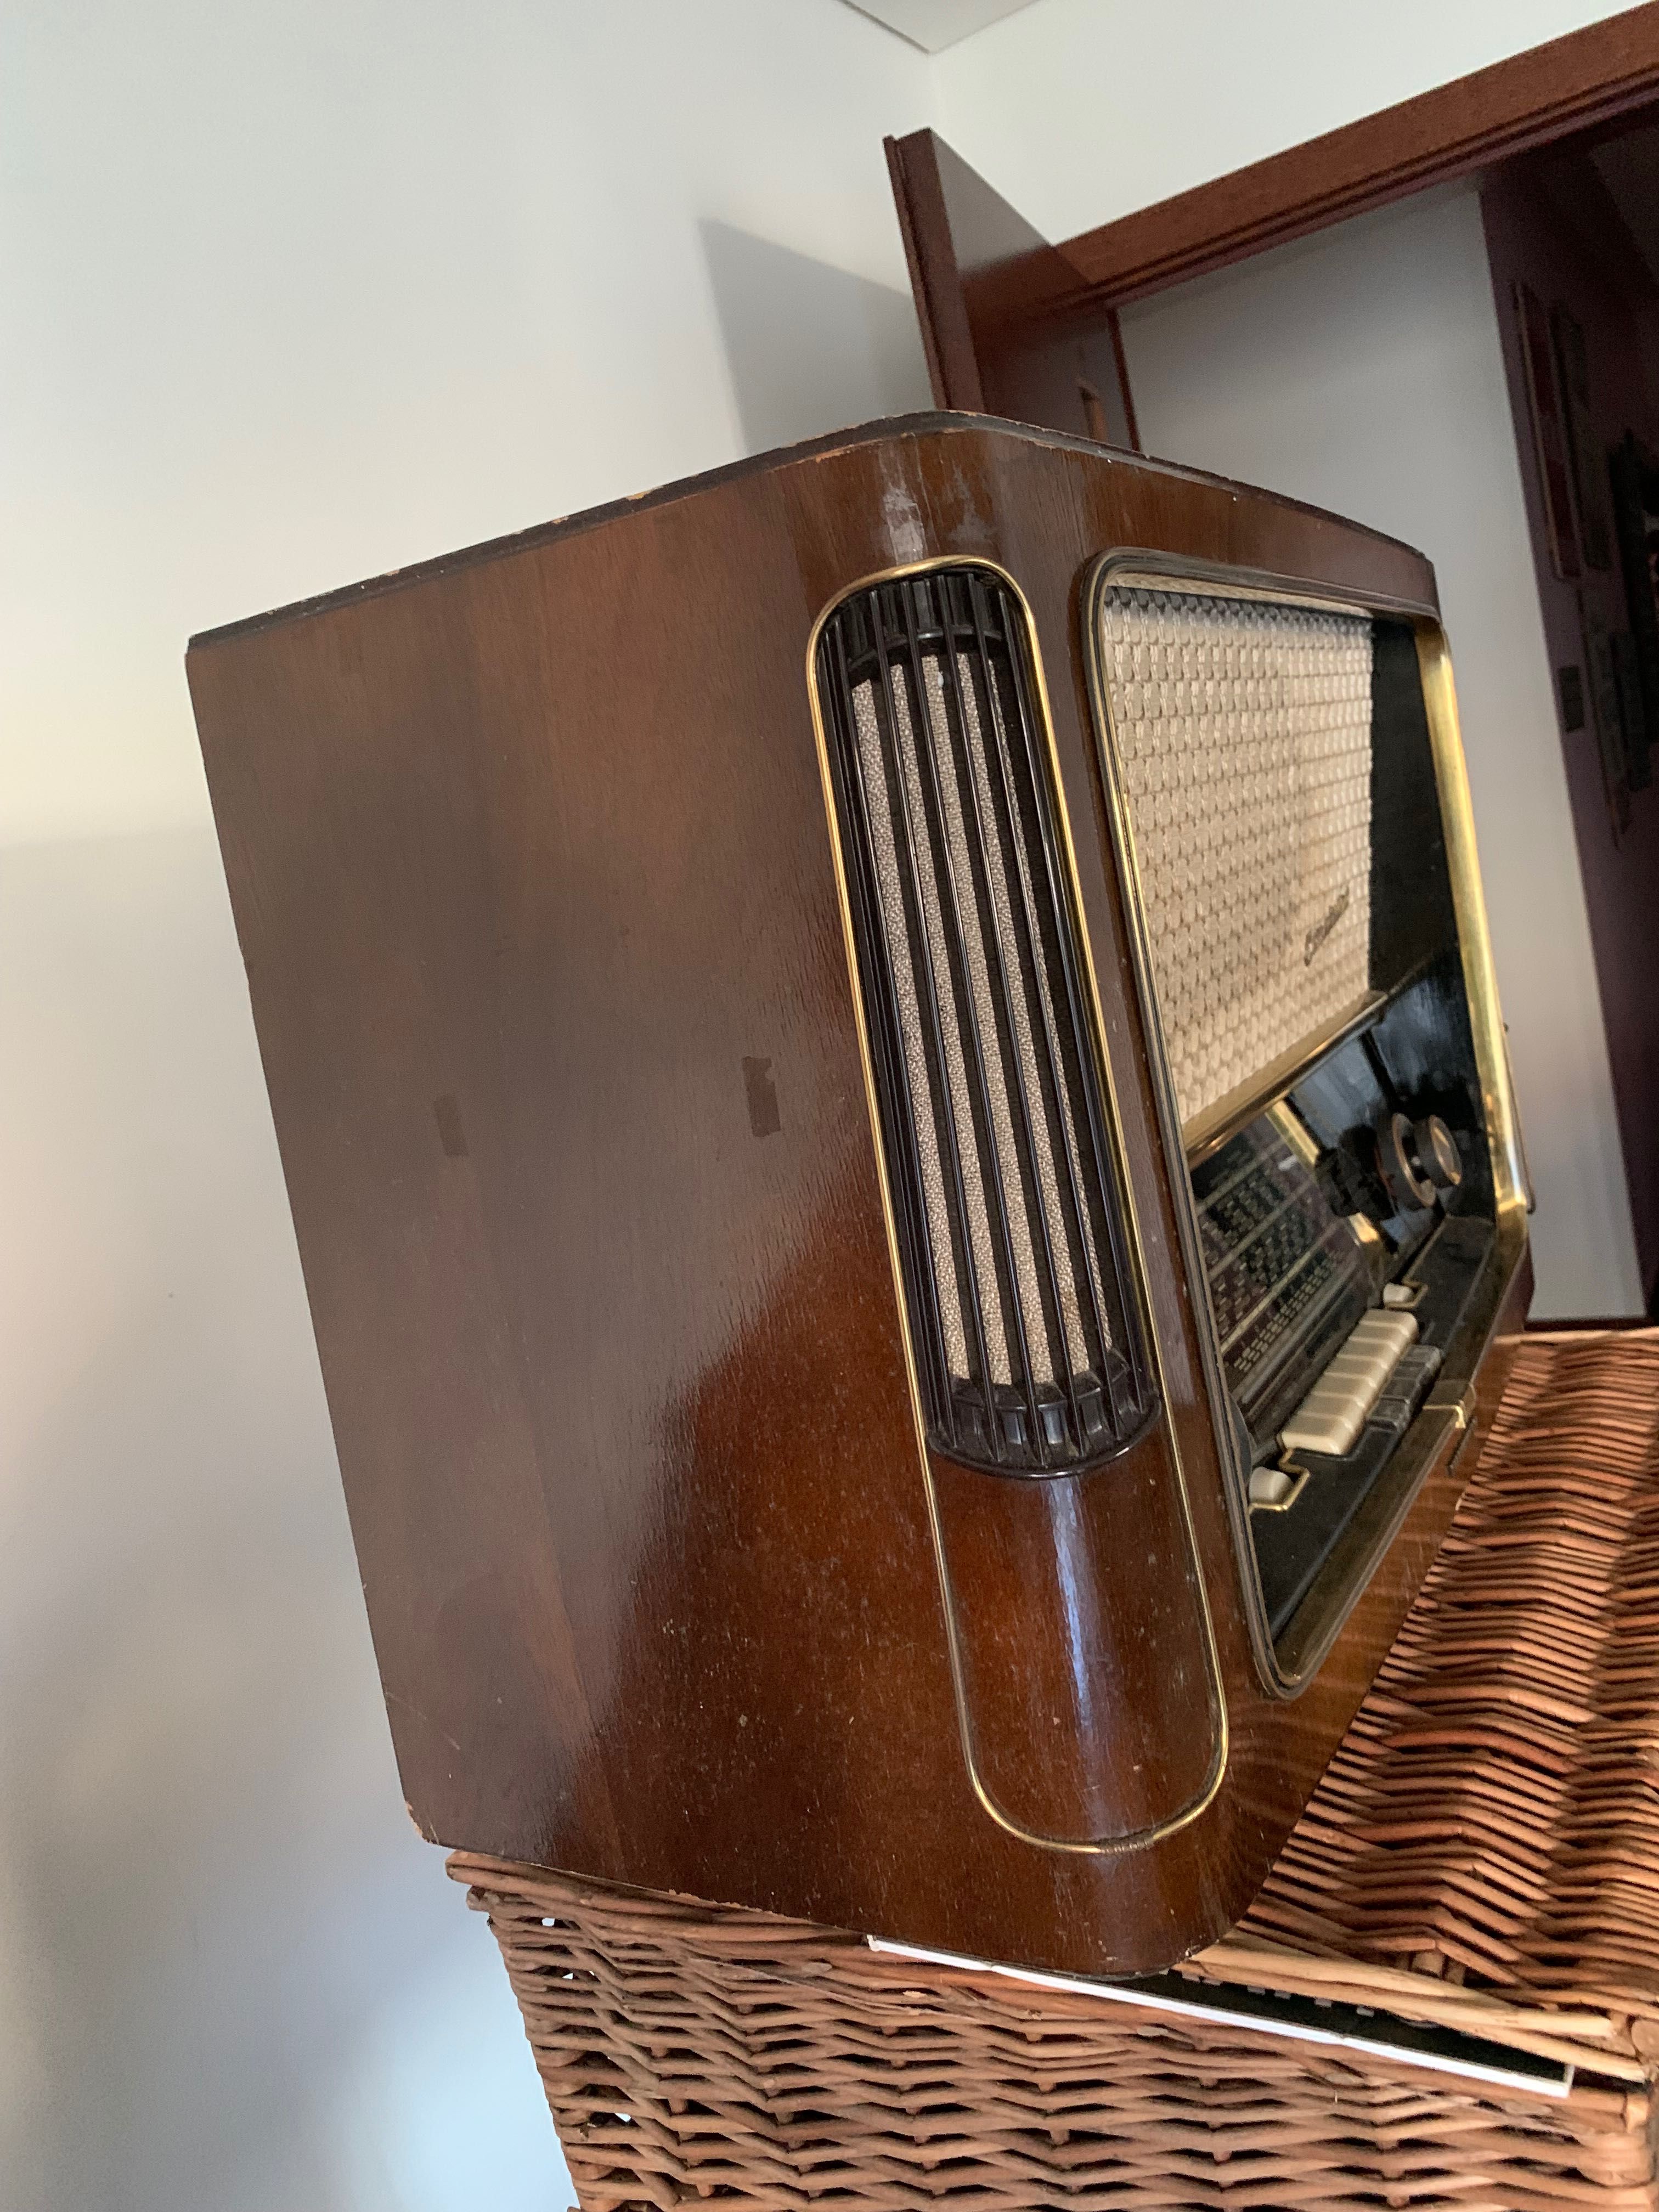 Rádio telefunken antigo